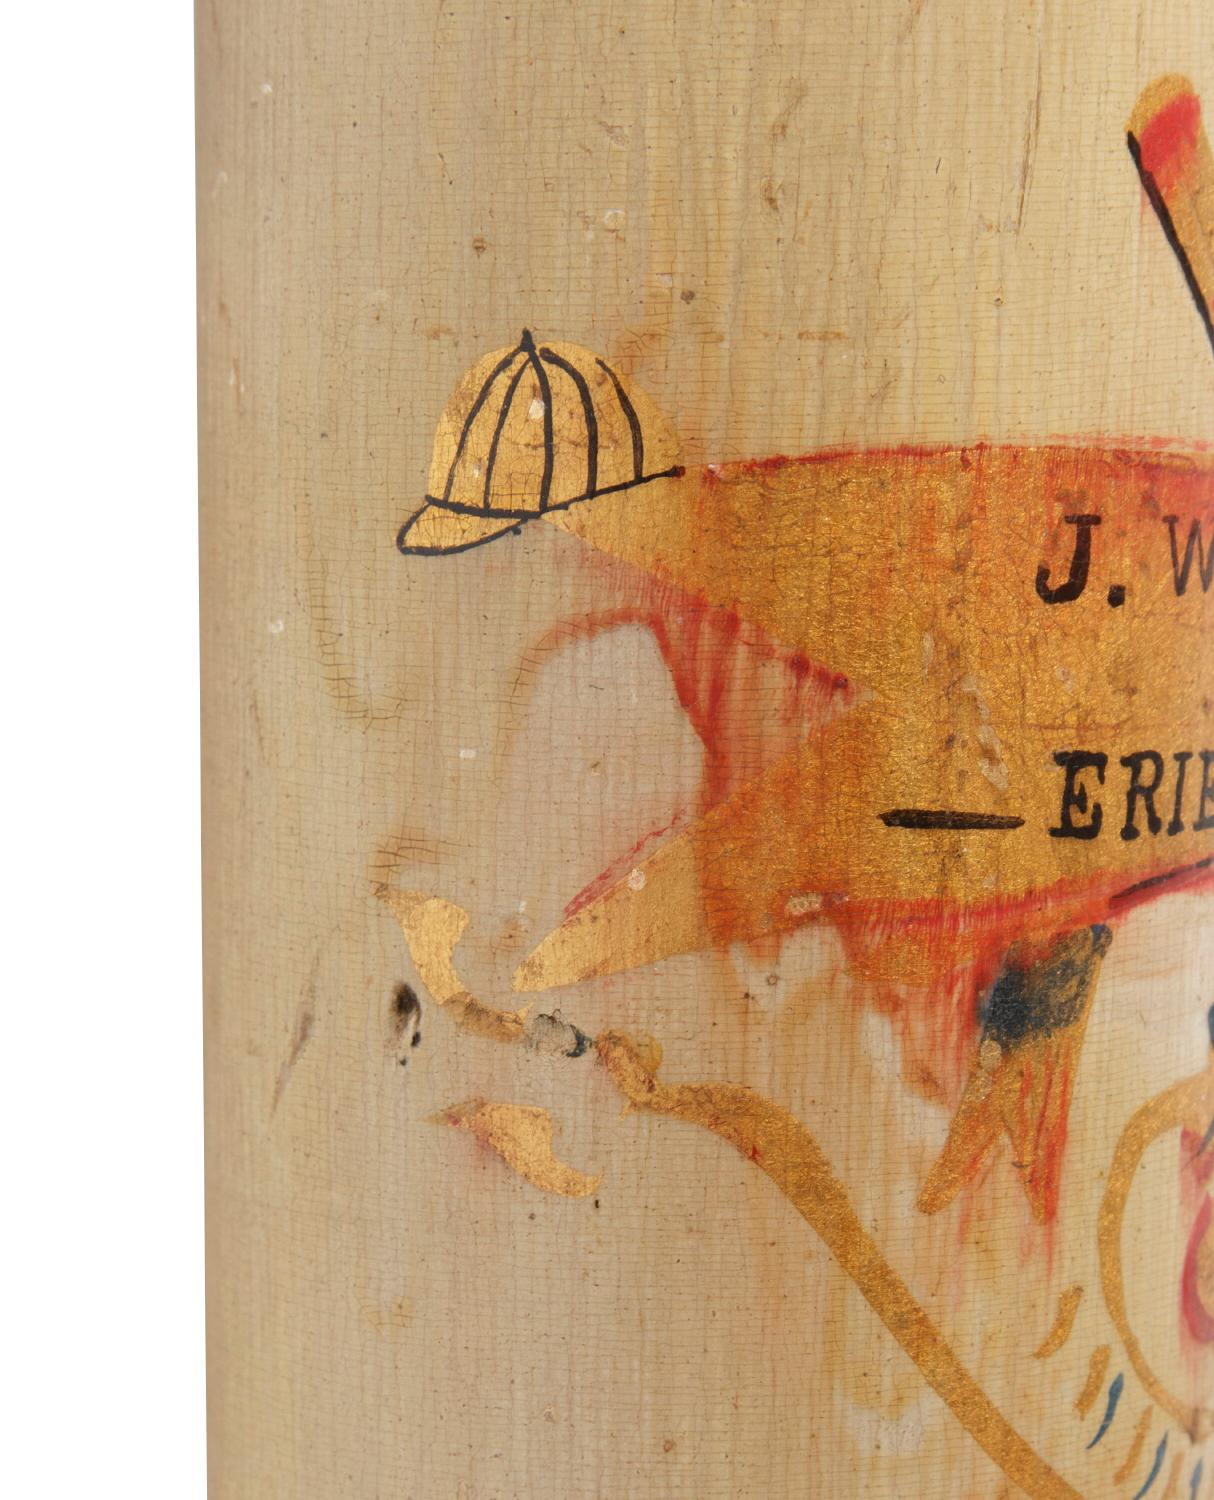 19th Century Oversized, Paint-Decorated Baseball Bat Presented to J. Whipple